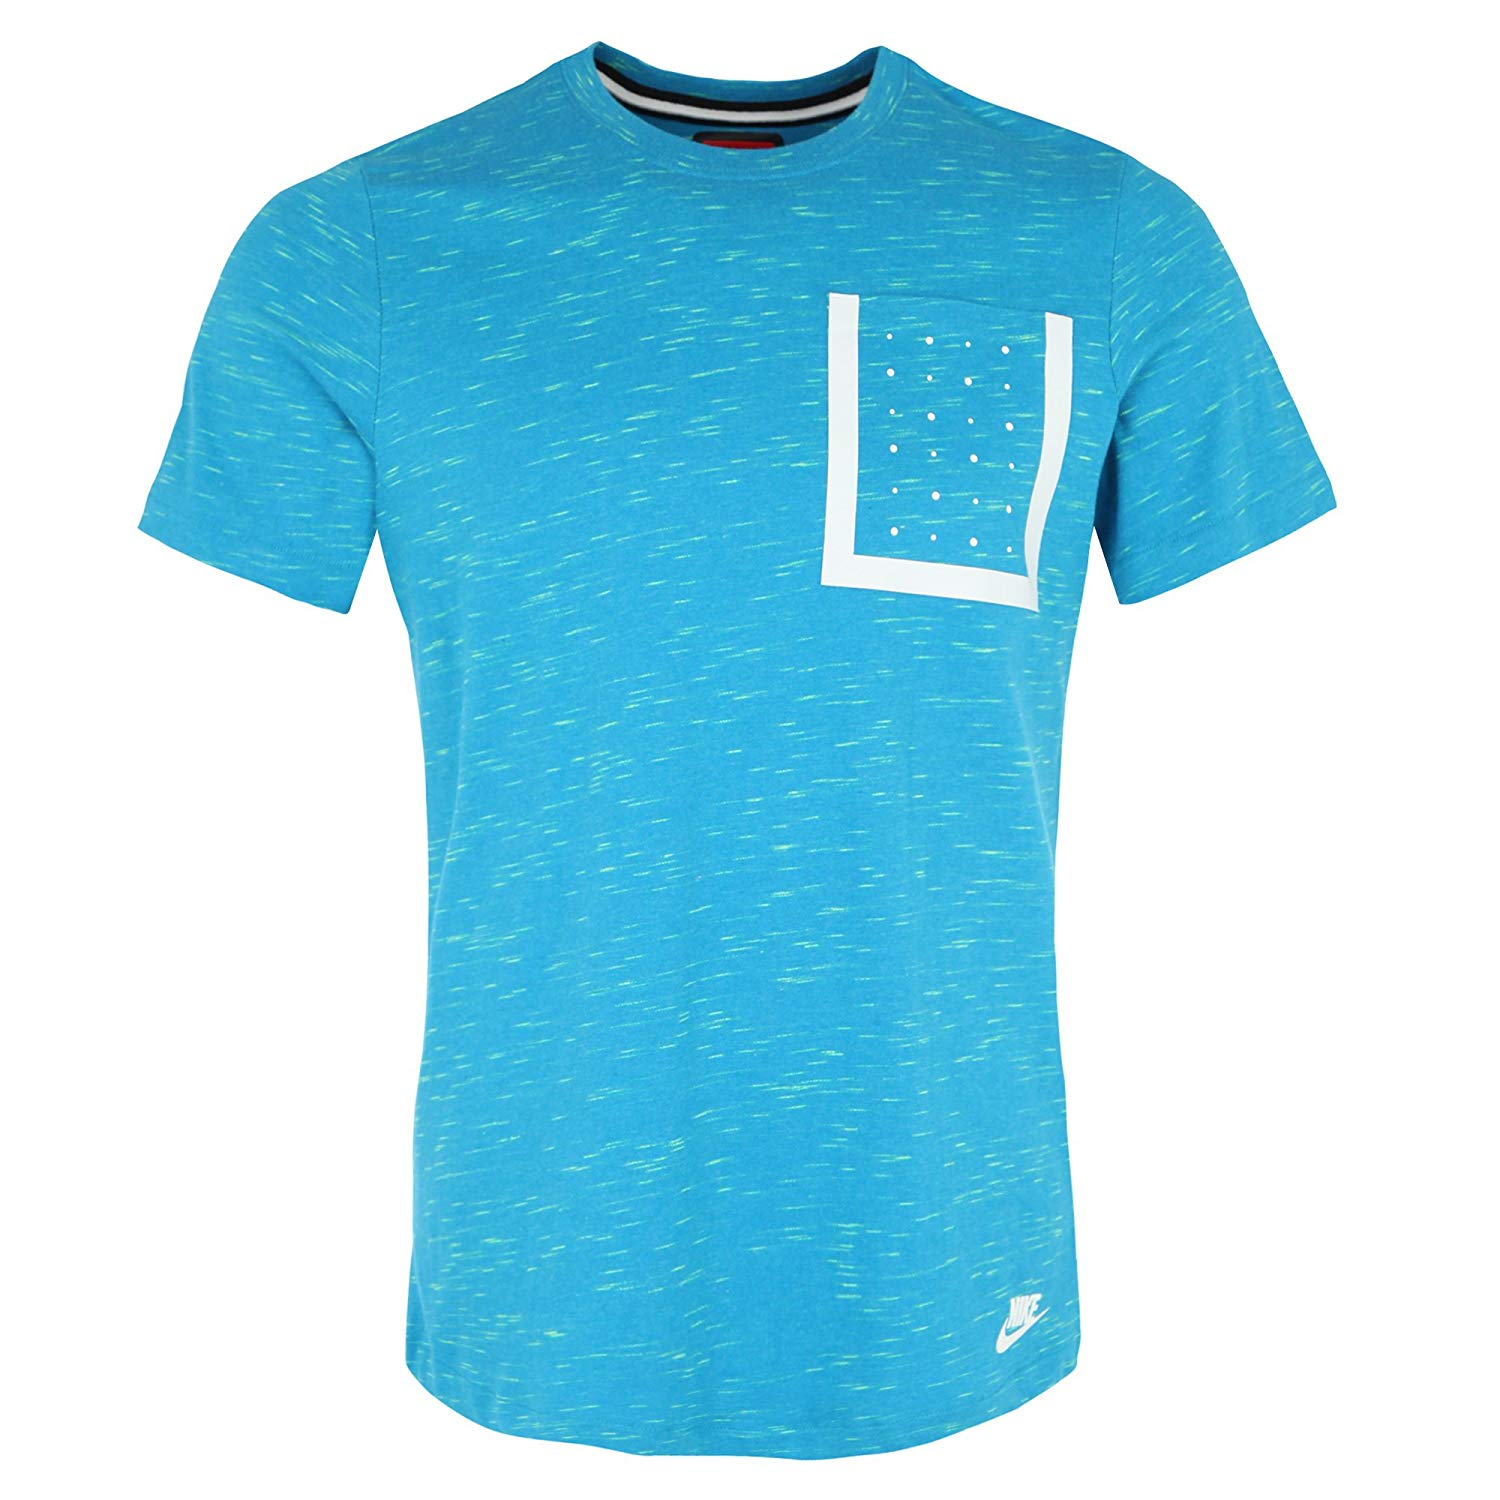 Nike Mens Bonded Pocket T Shirt